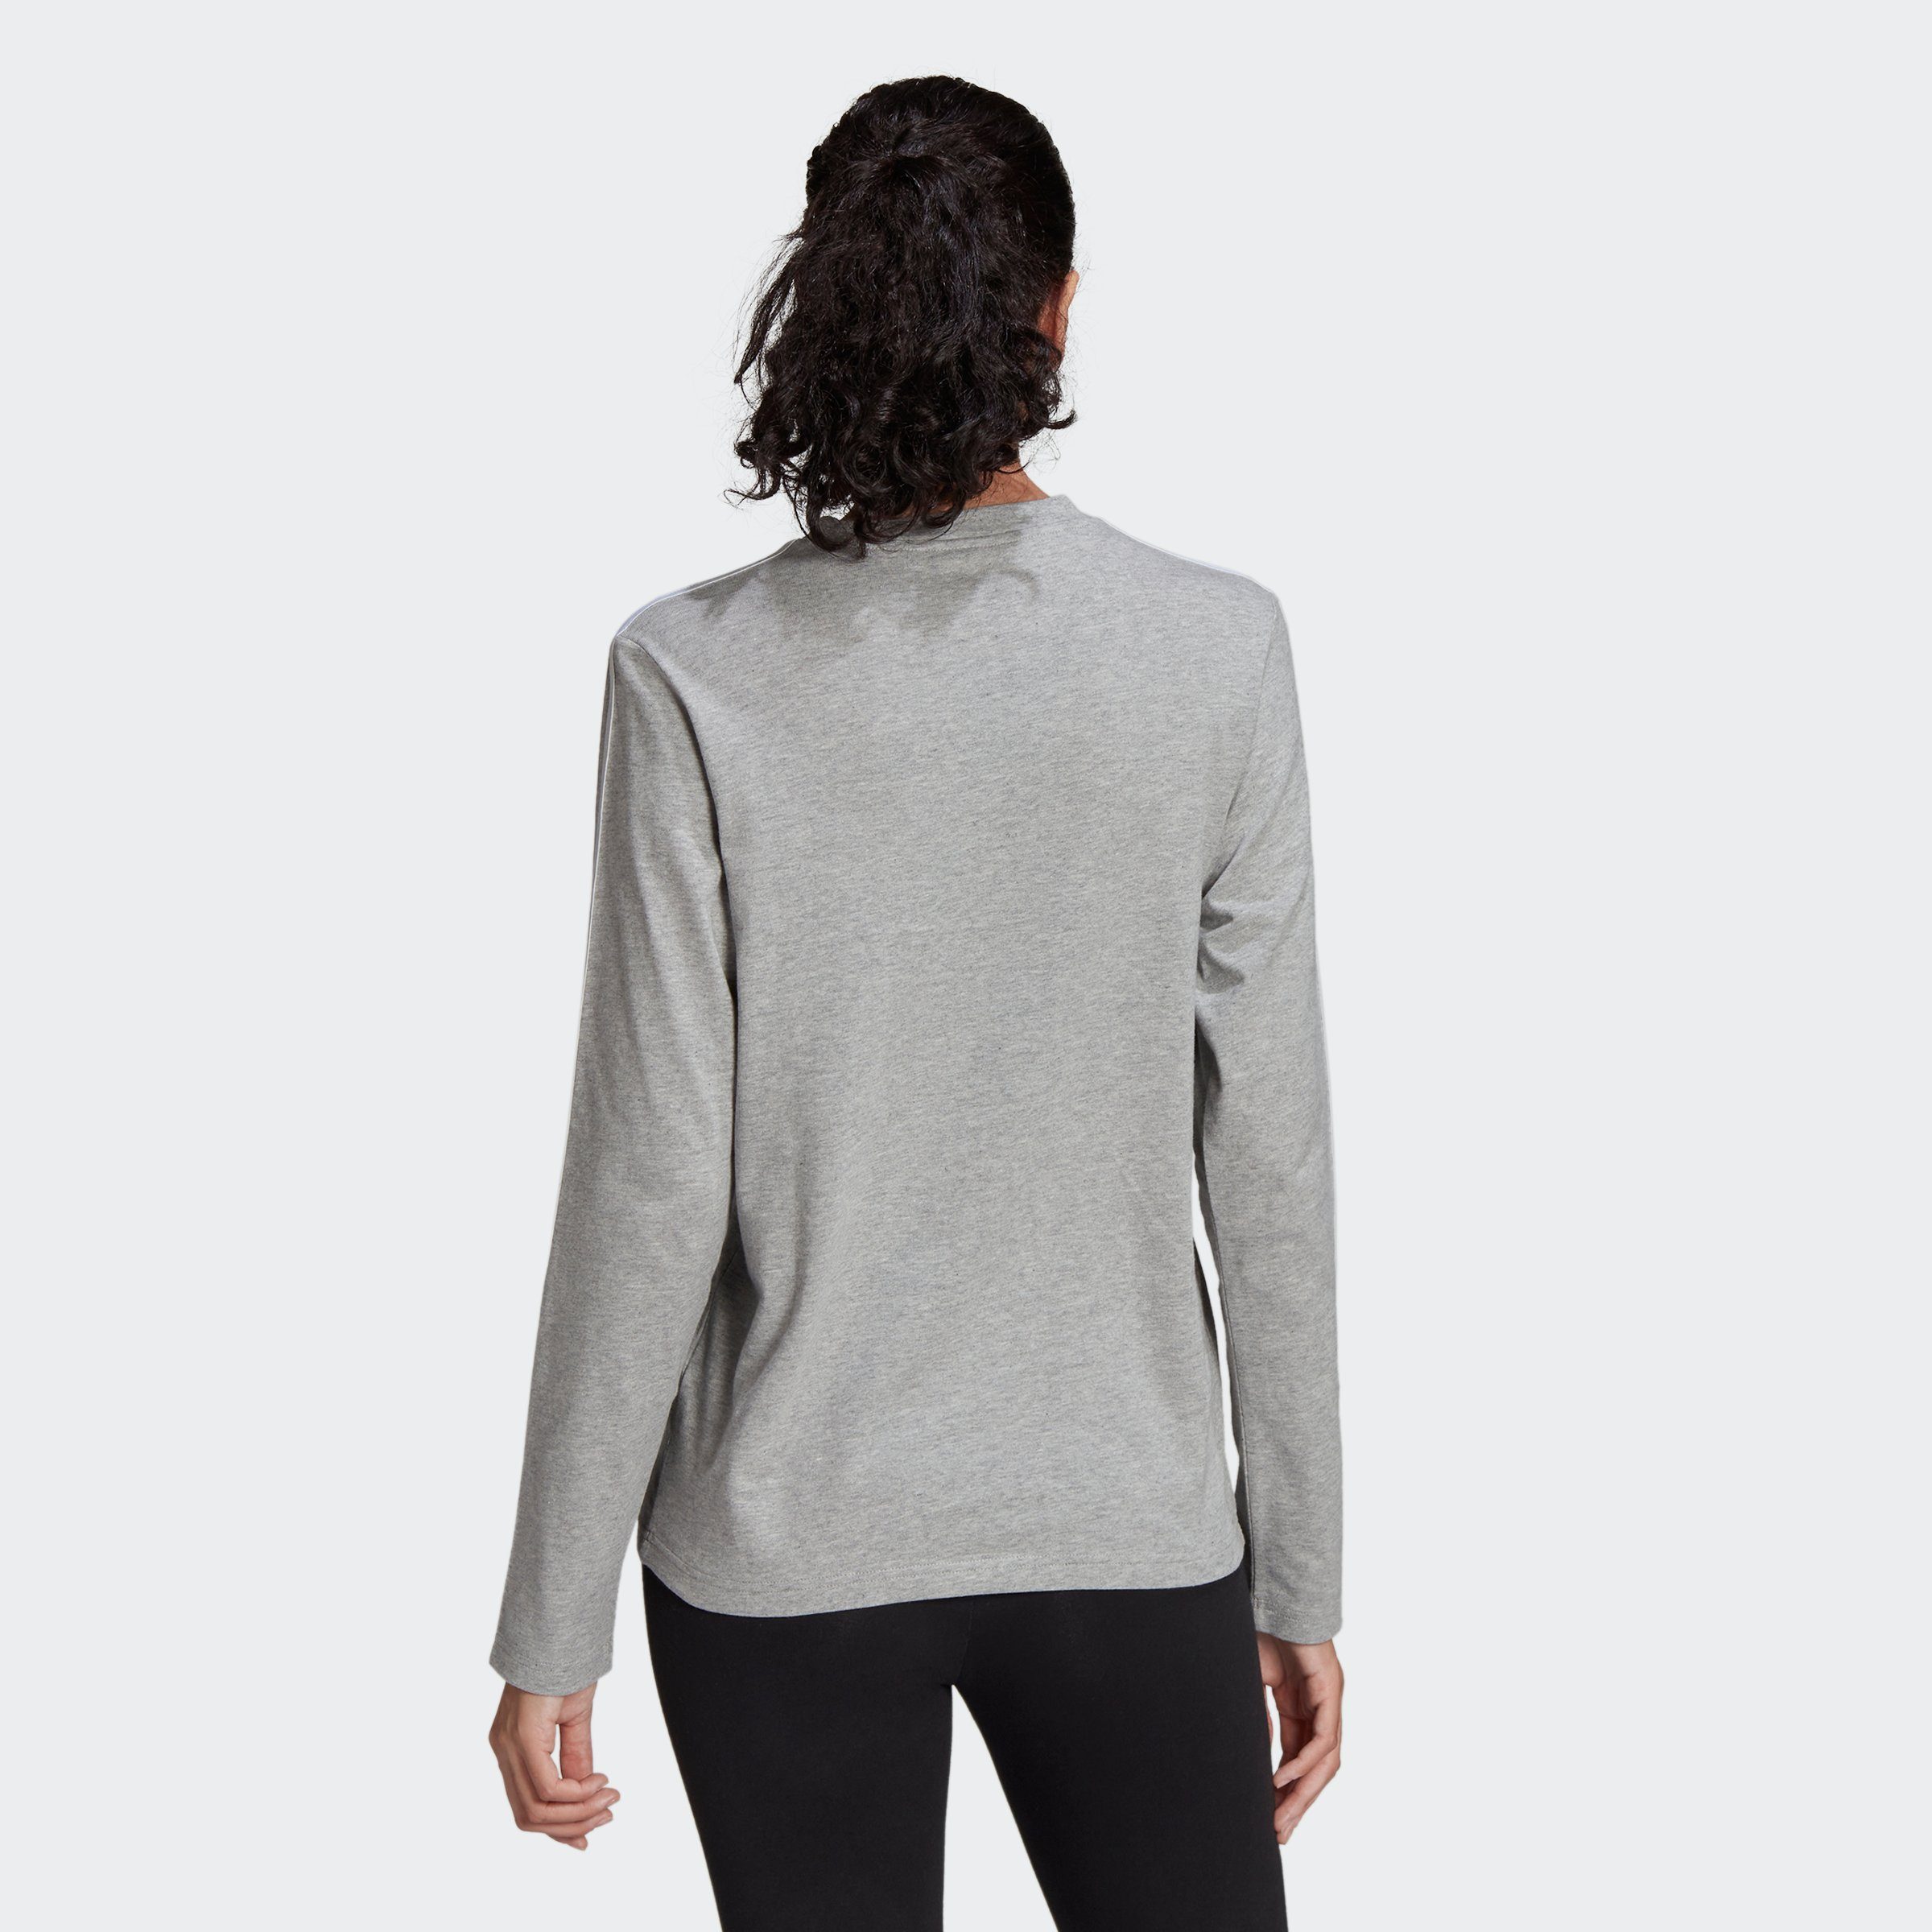 3STREIFEN Grey ESSENTIALS White Langarmshirt adidas / LONGSLEEVE Medium Sportswear Heather